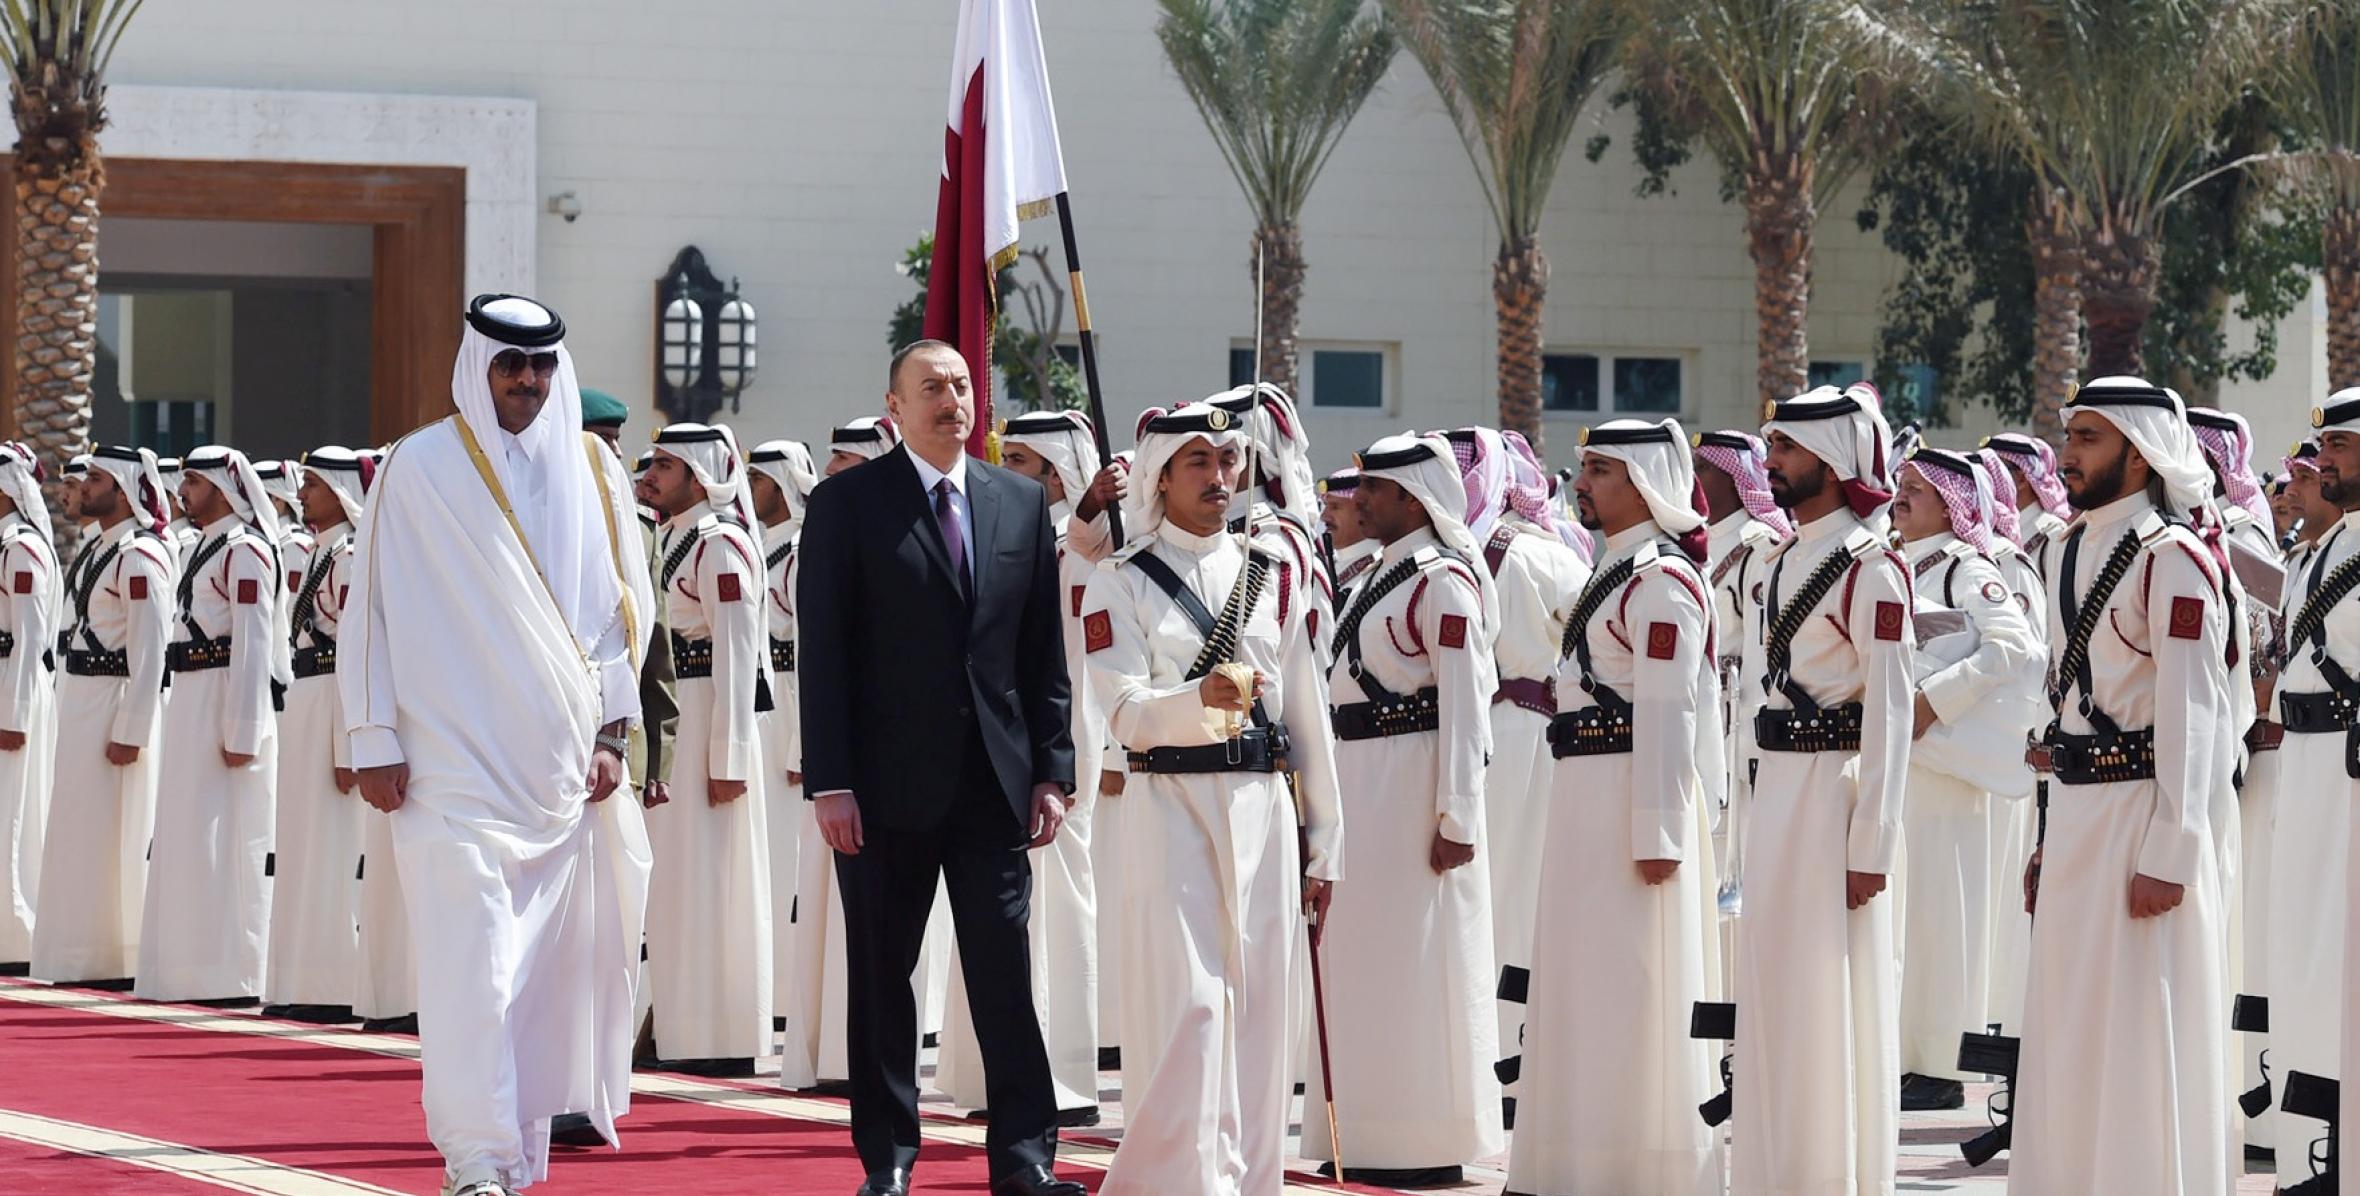 Official visit of Ilham Aliyev to Qatar